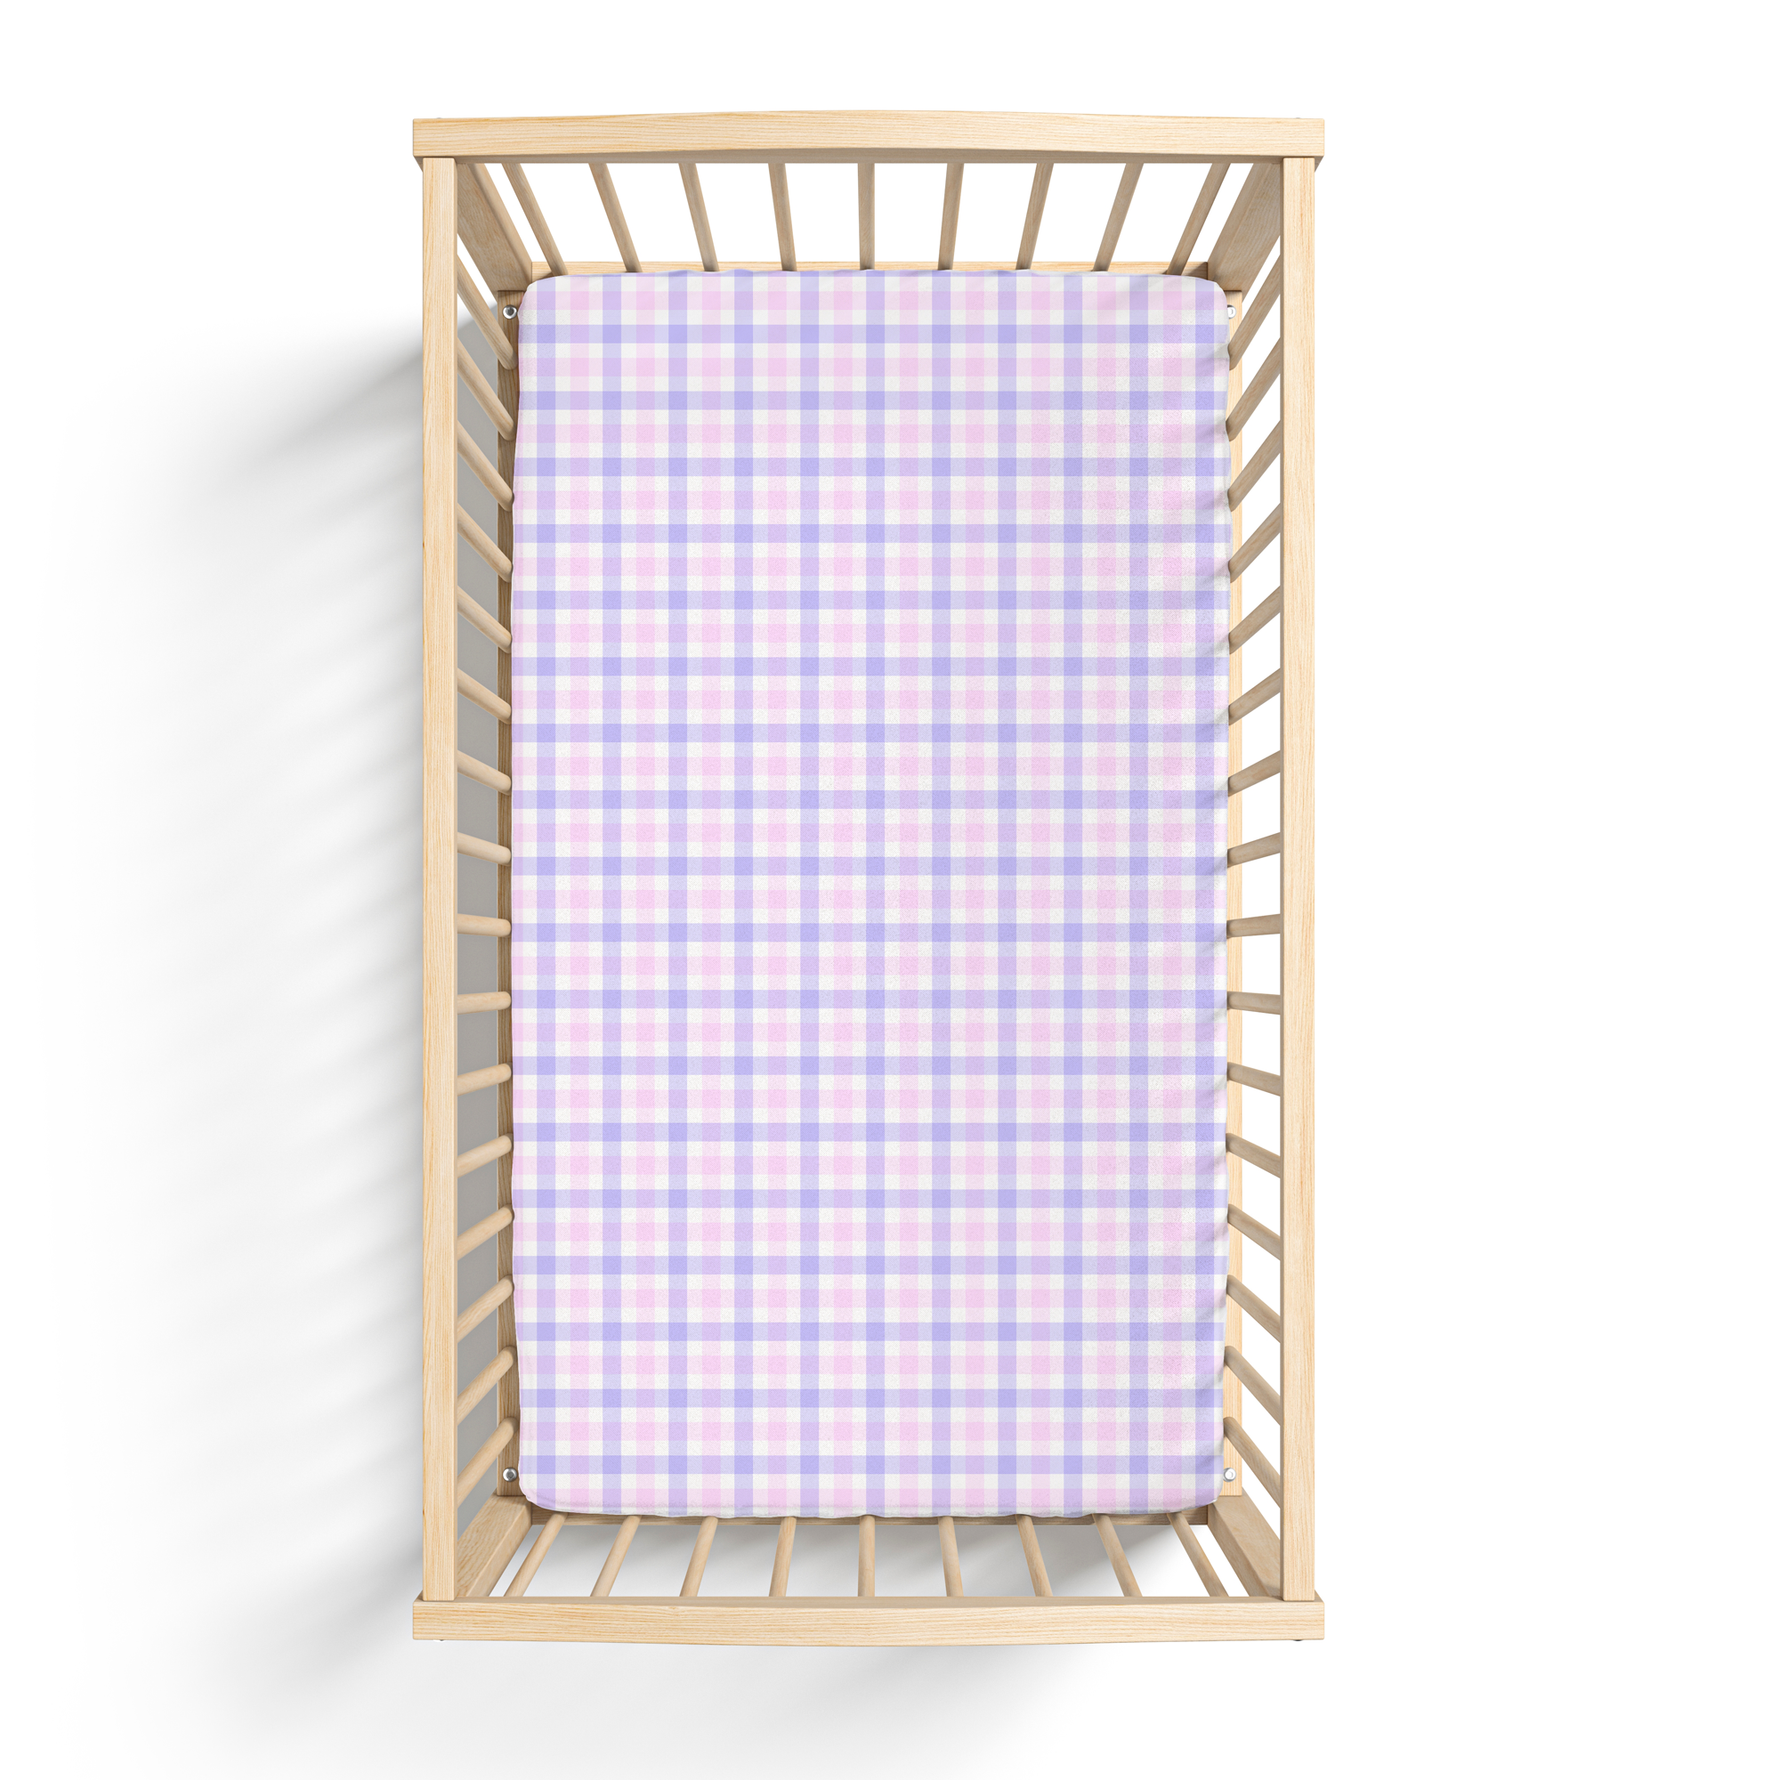 Girly Plaid Crib Sheet - Lindsay Ann Artistry